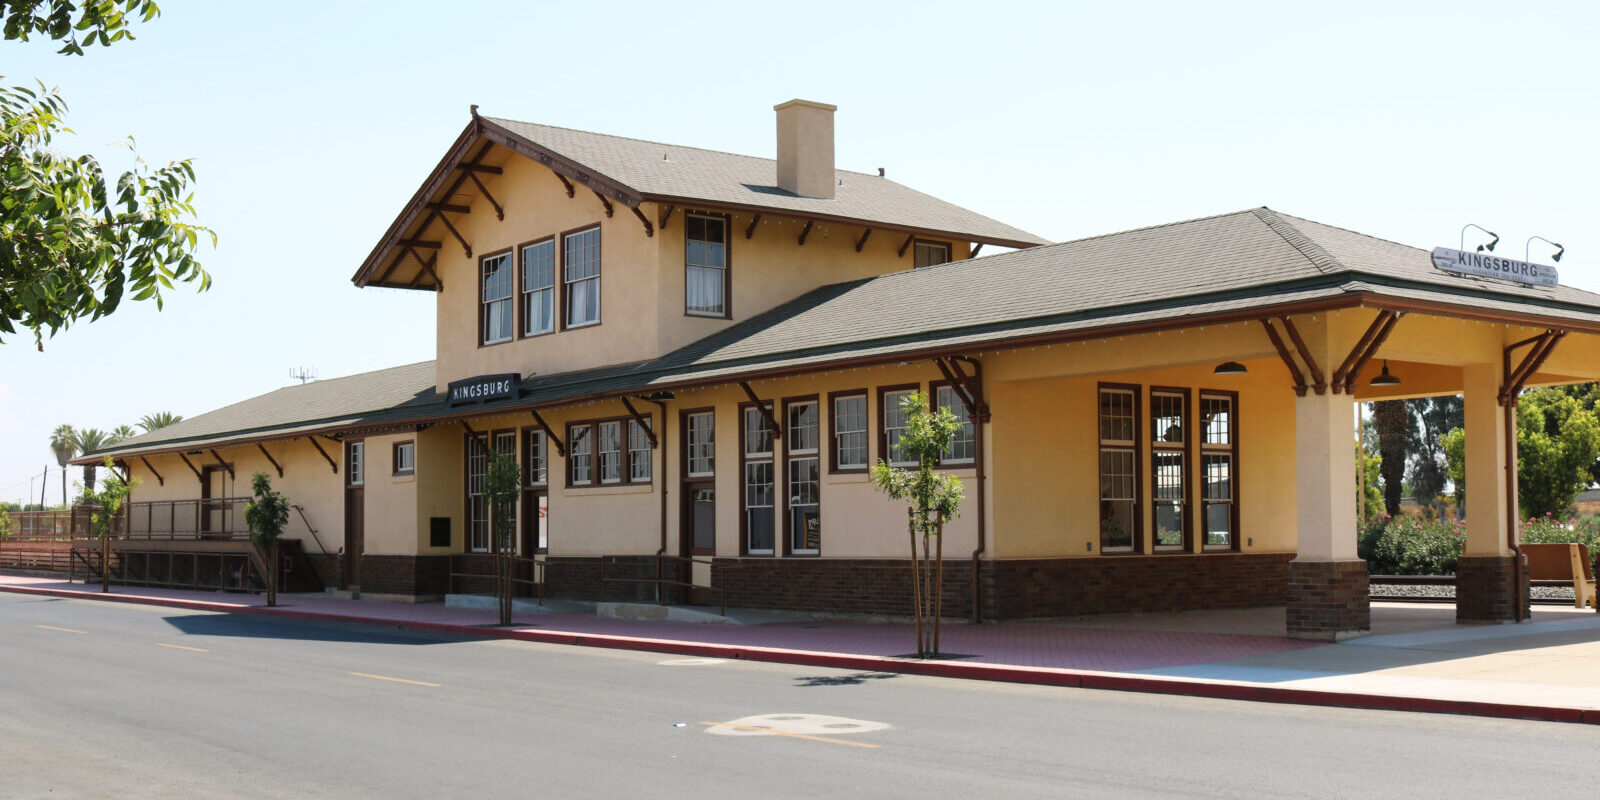 Historic Train Depot Rehabilitation - Kingsburg, CA